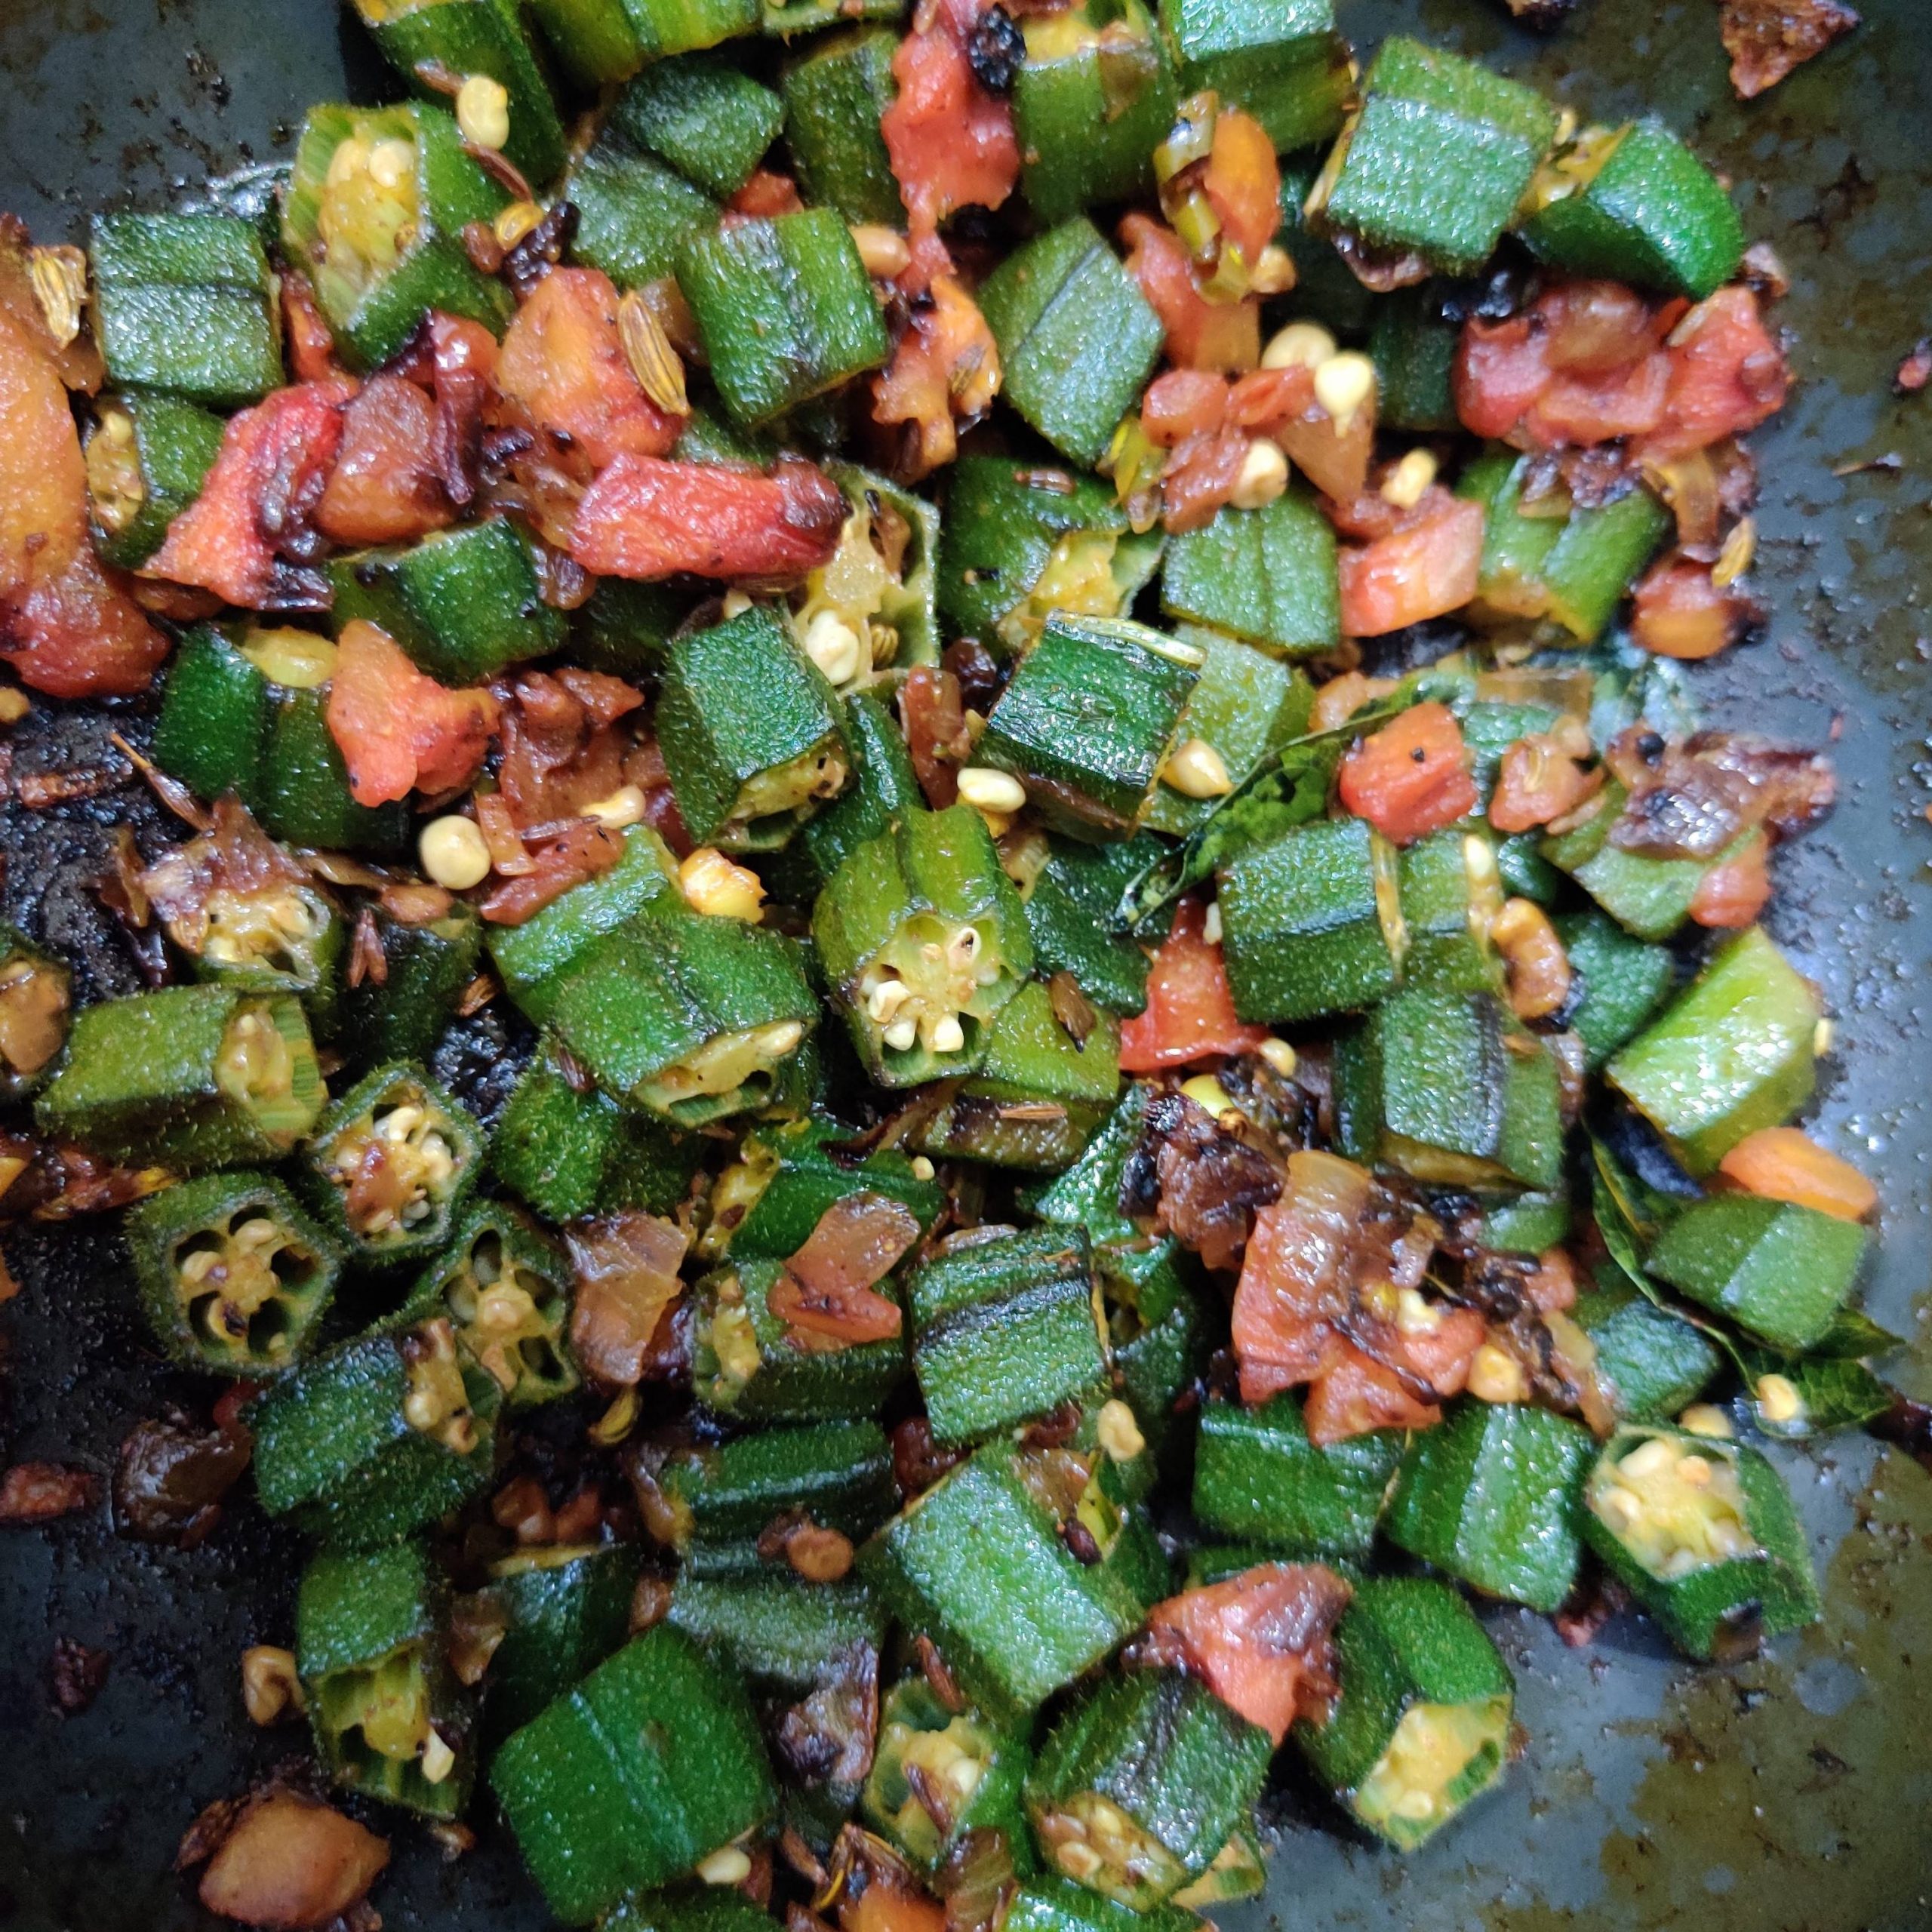 Fried Okra Recipe - How To Make Crispy Bhindi Masala Fry At Home